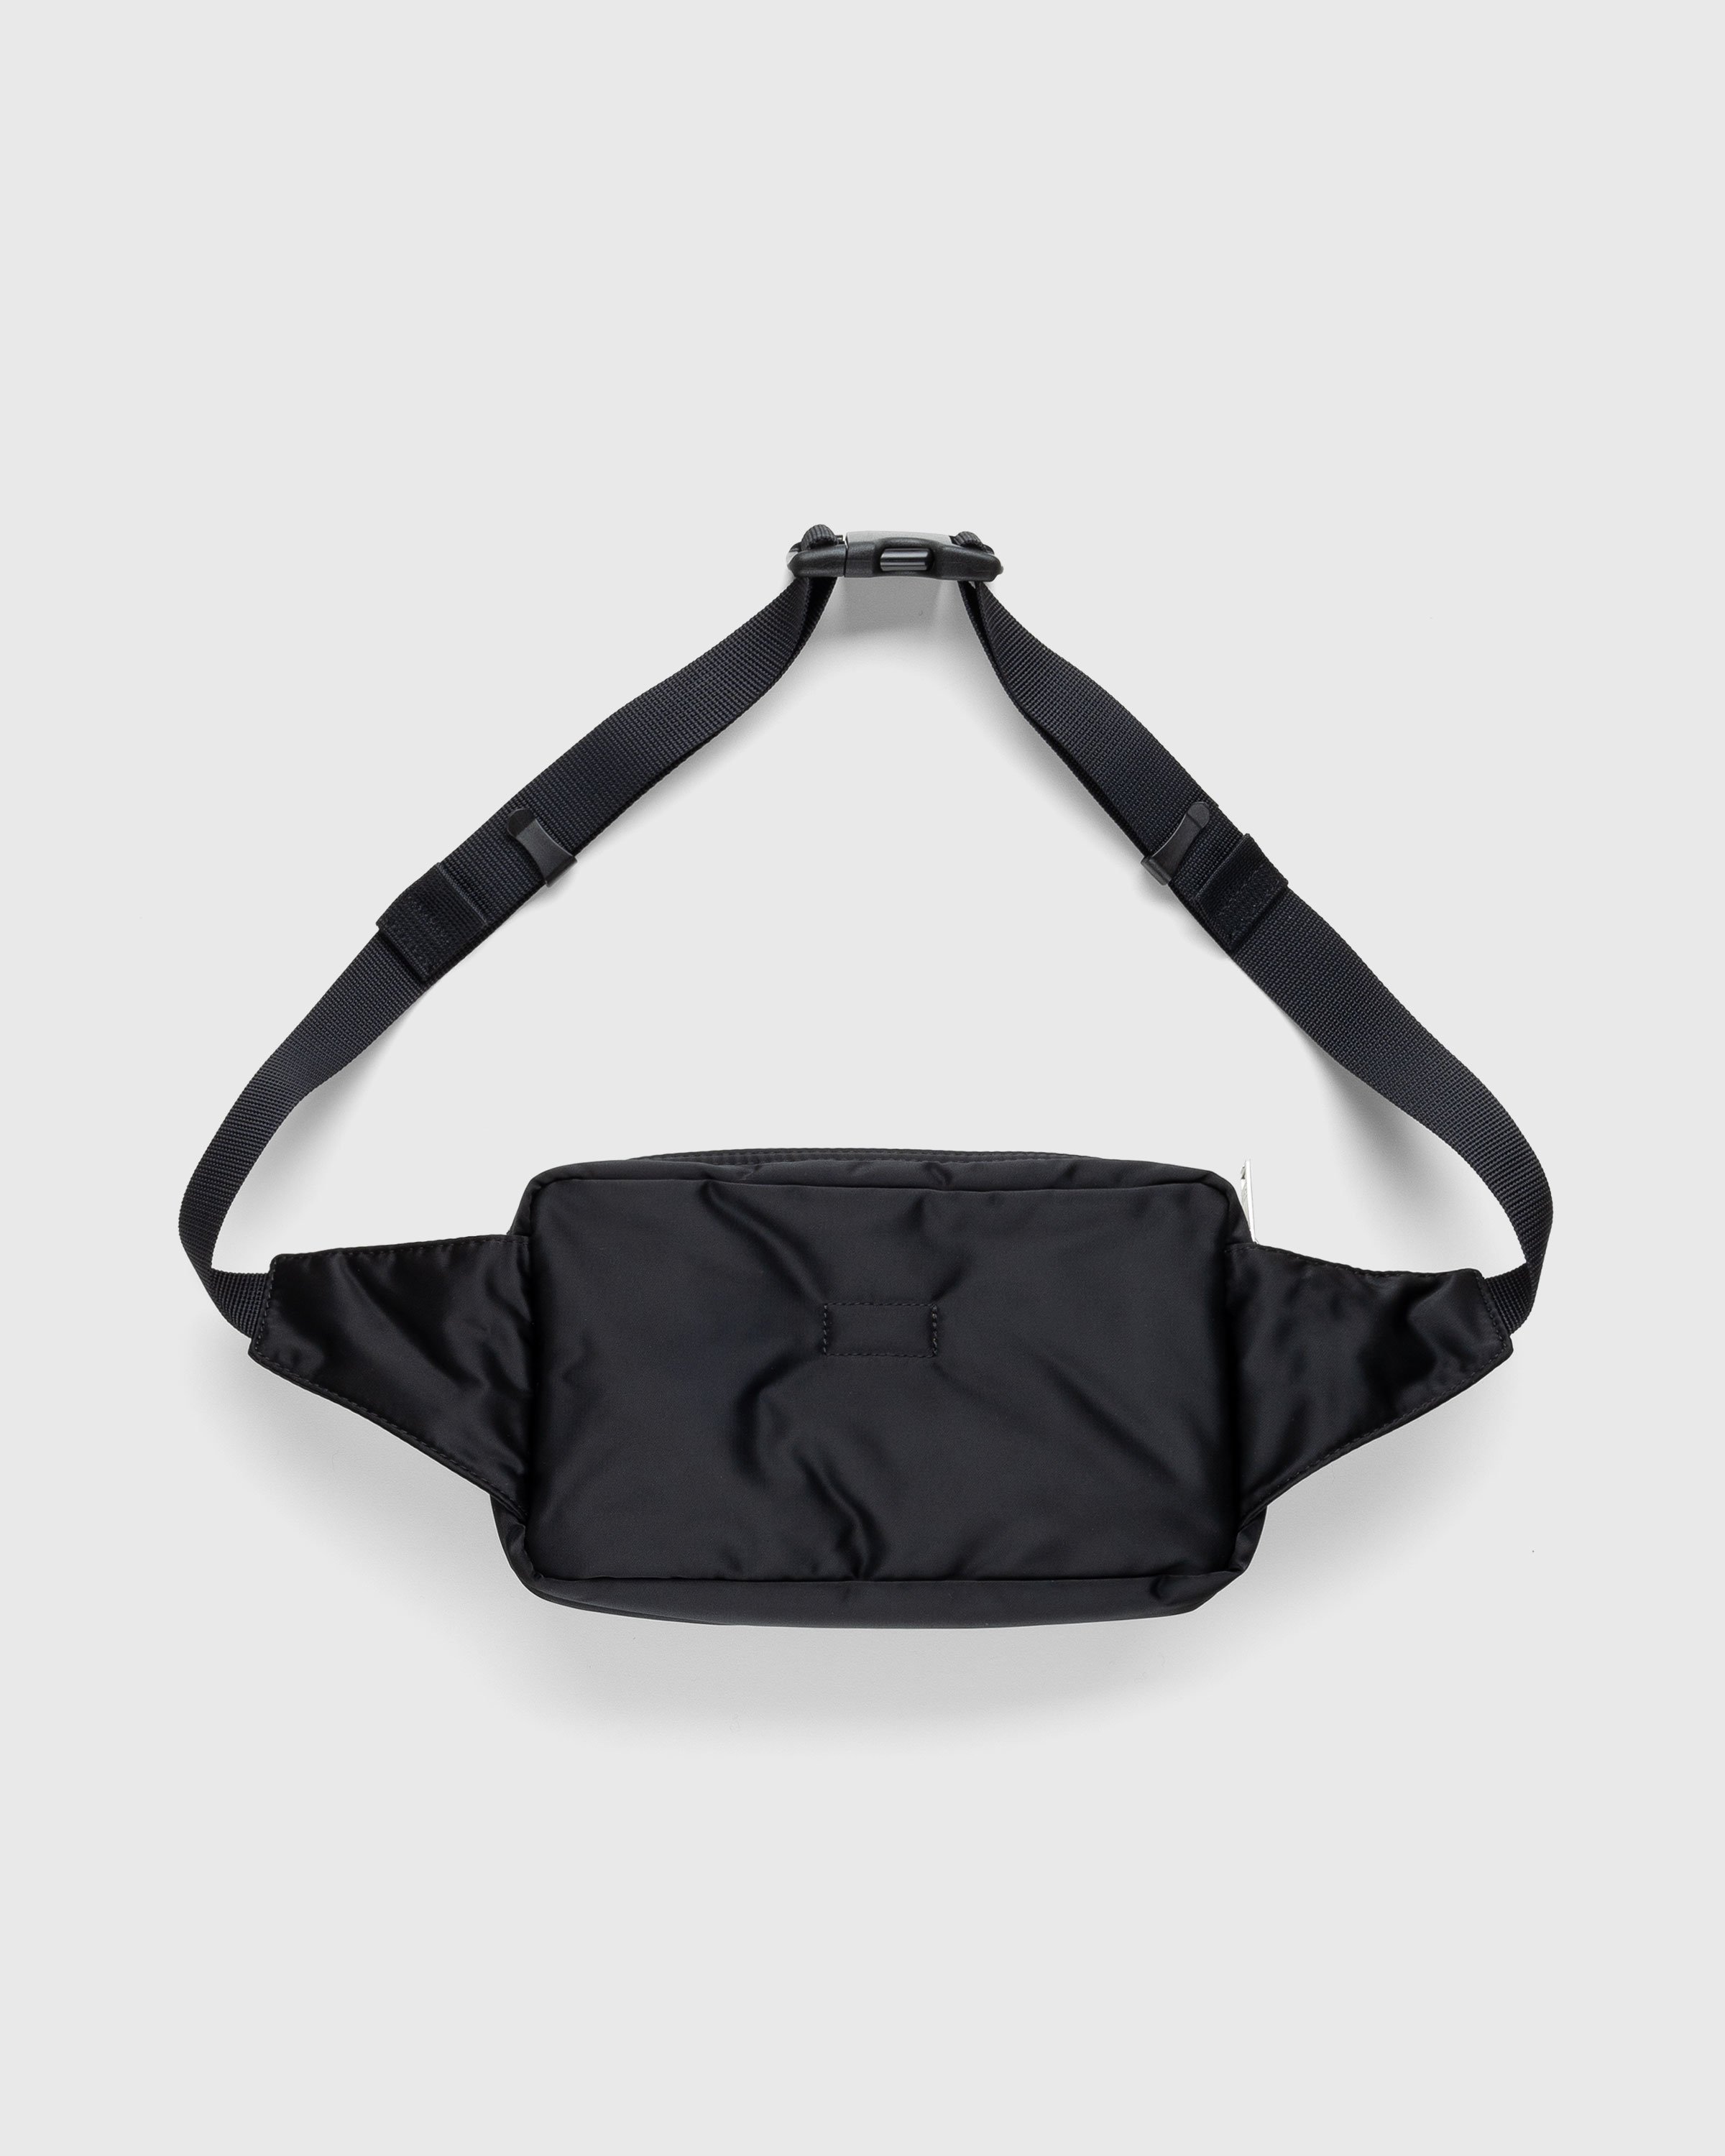 Porter-Yoshida & Co. - Tanker Waist Bag Black - Accessories - Black - Image 2